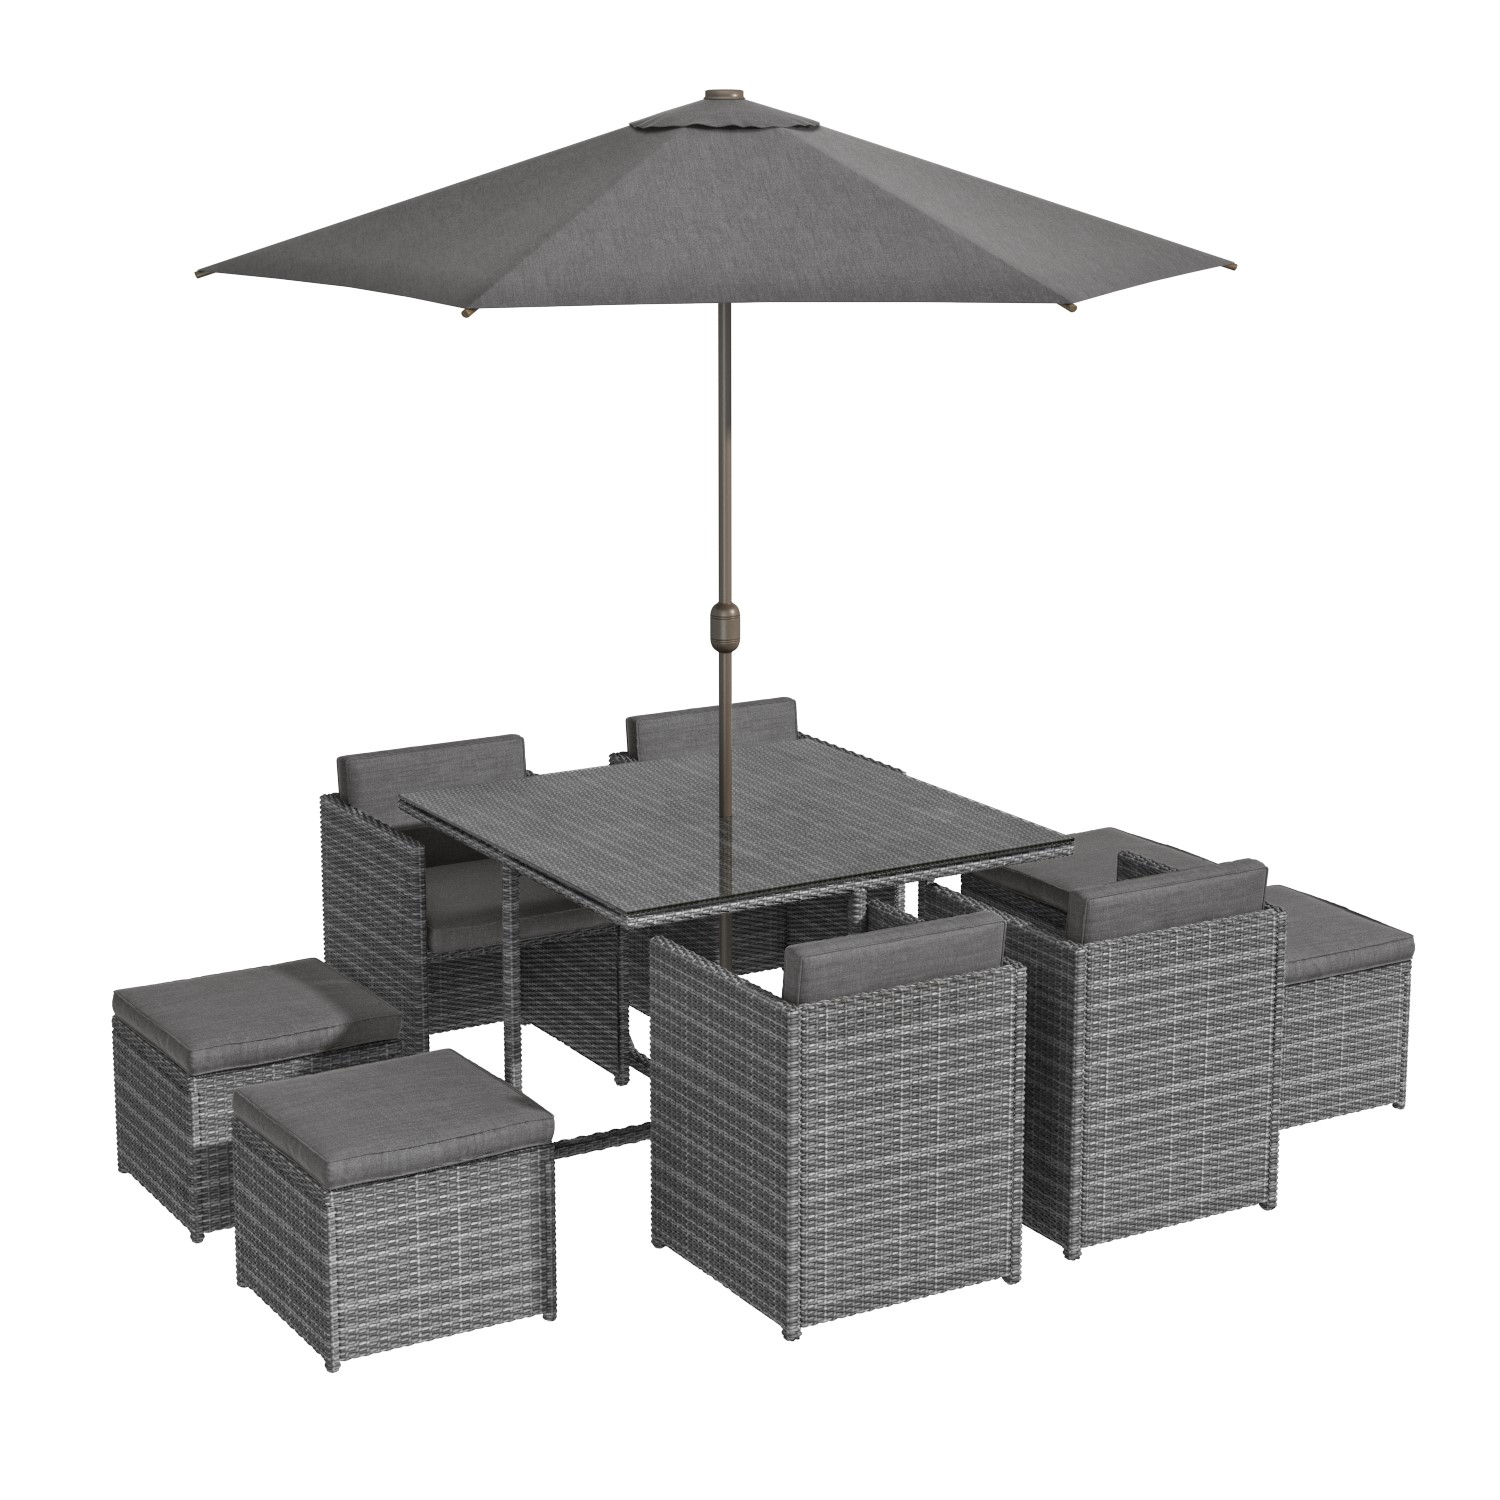 Rattan 10 Piece Cube Garden Dining Set in Dark Grey - Parasol Included